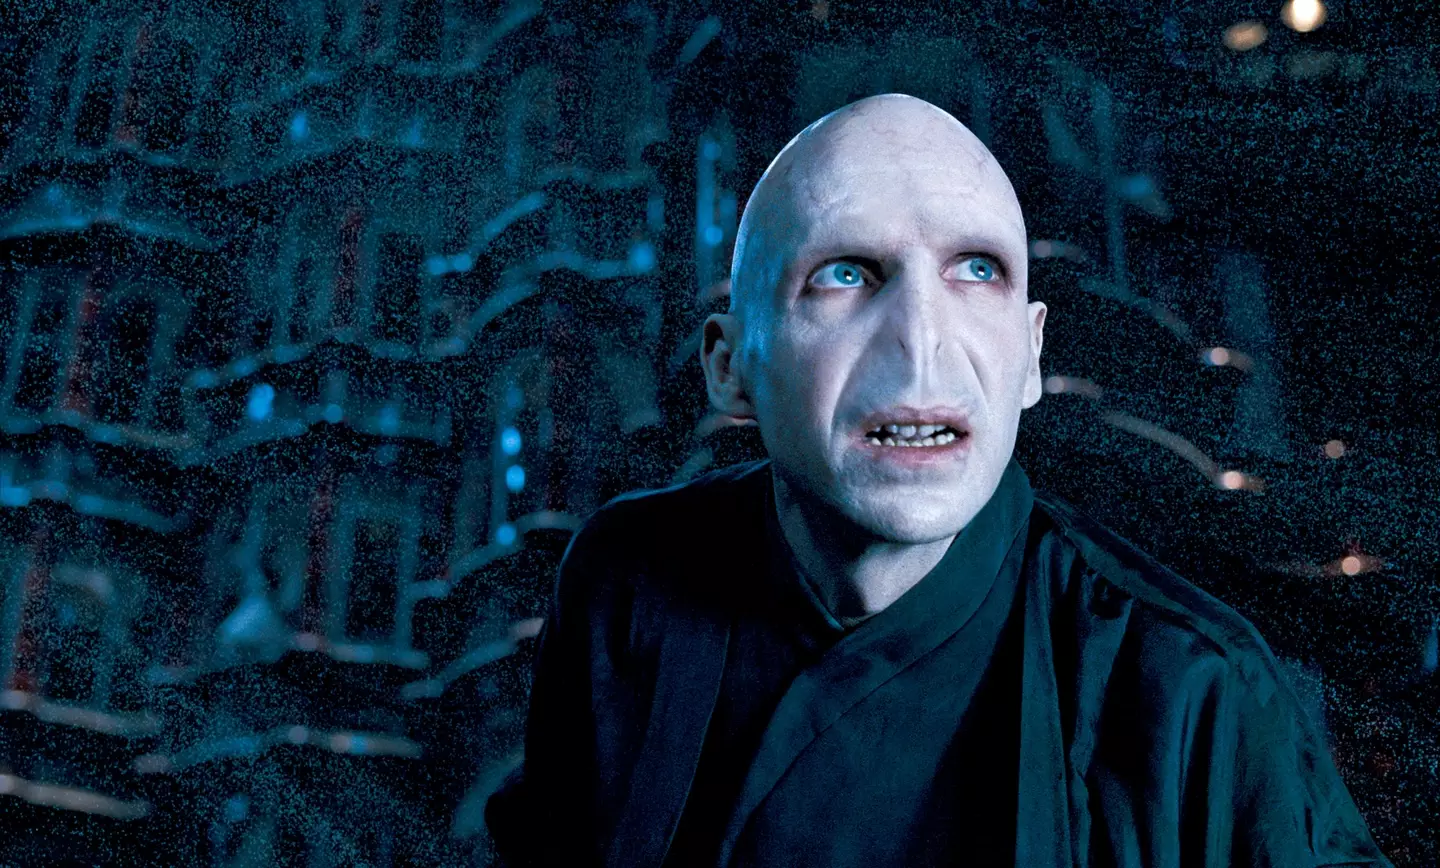 Fiennes as Voldemort.